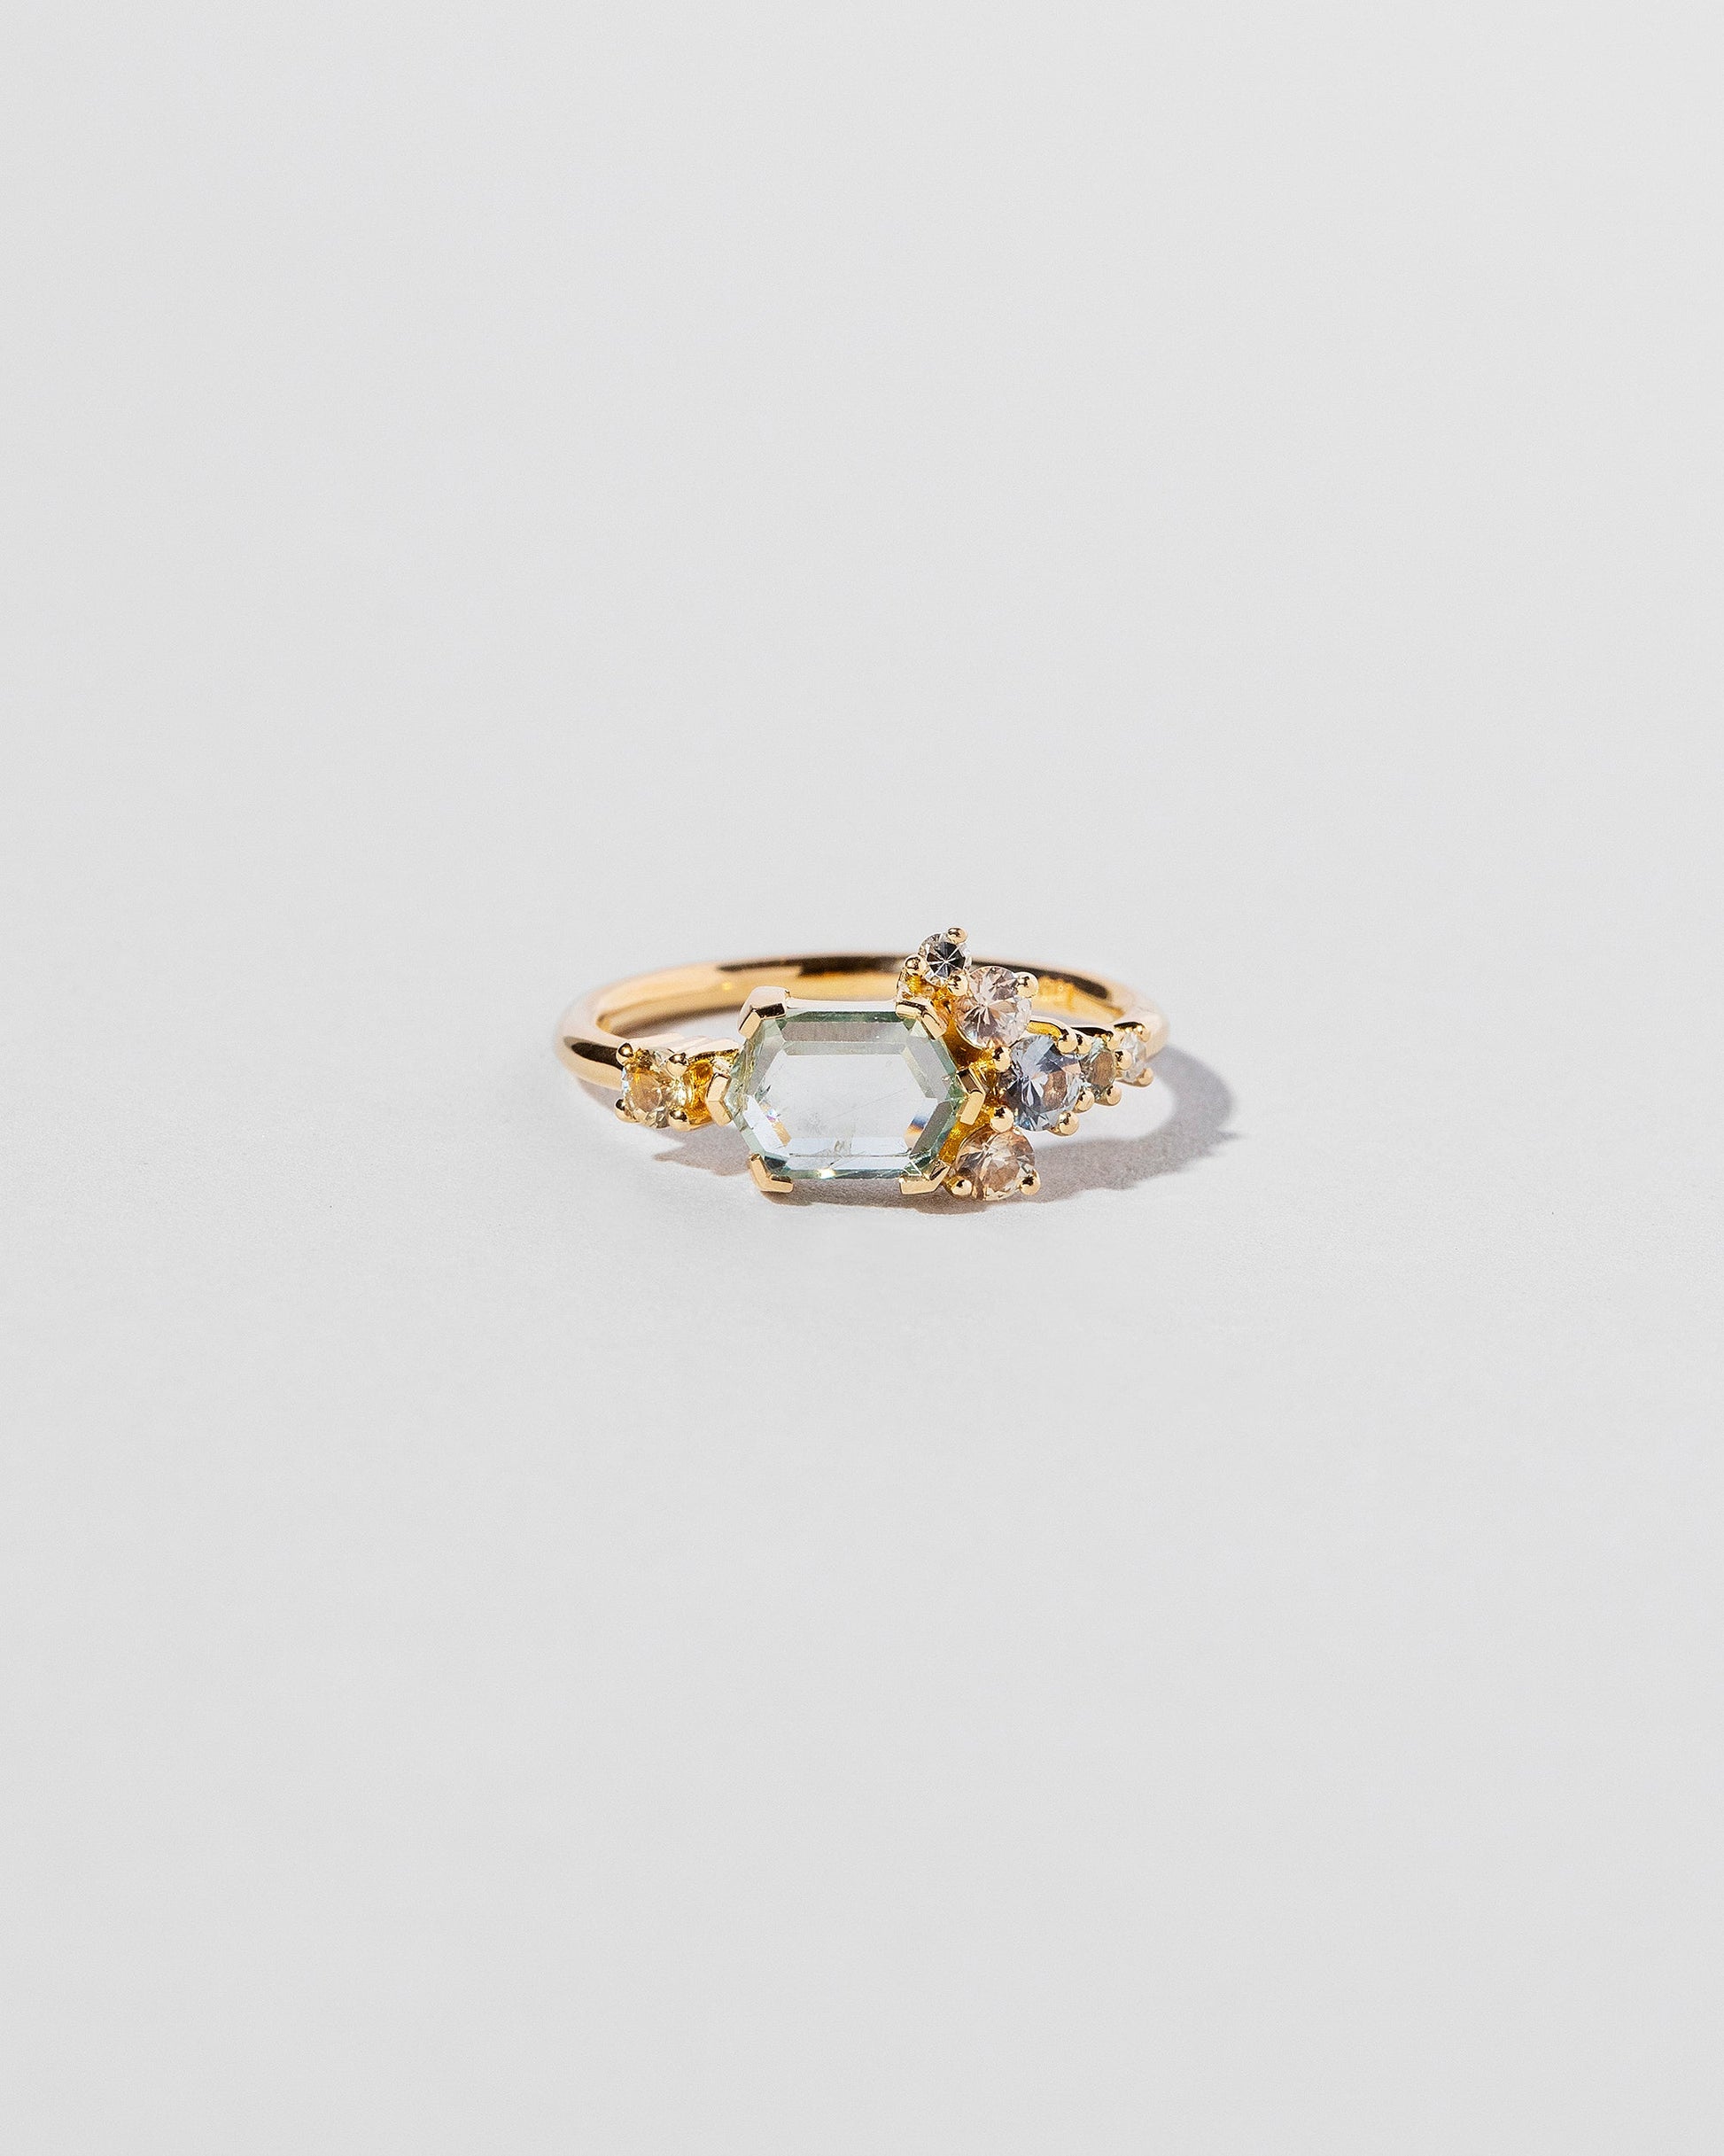  Hexagonal Slice Sapphire Cluster Ring on light color background.